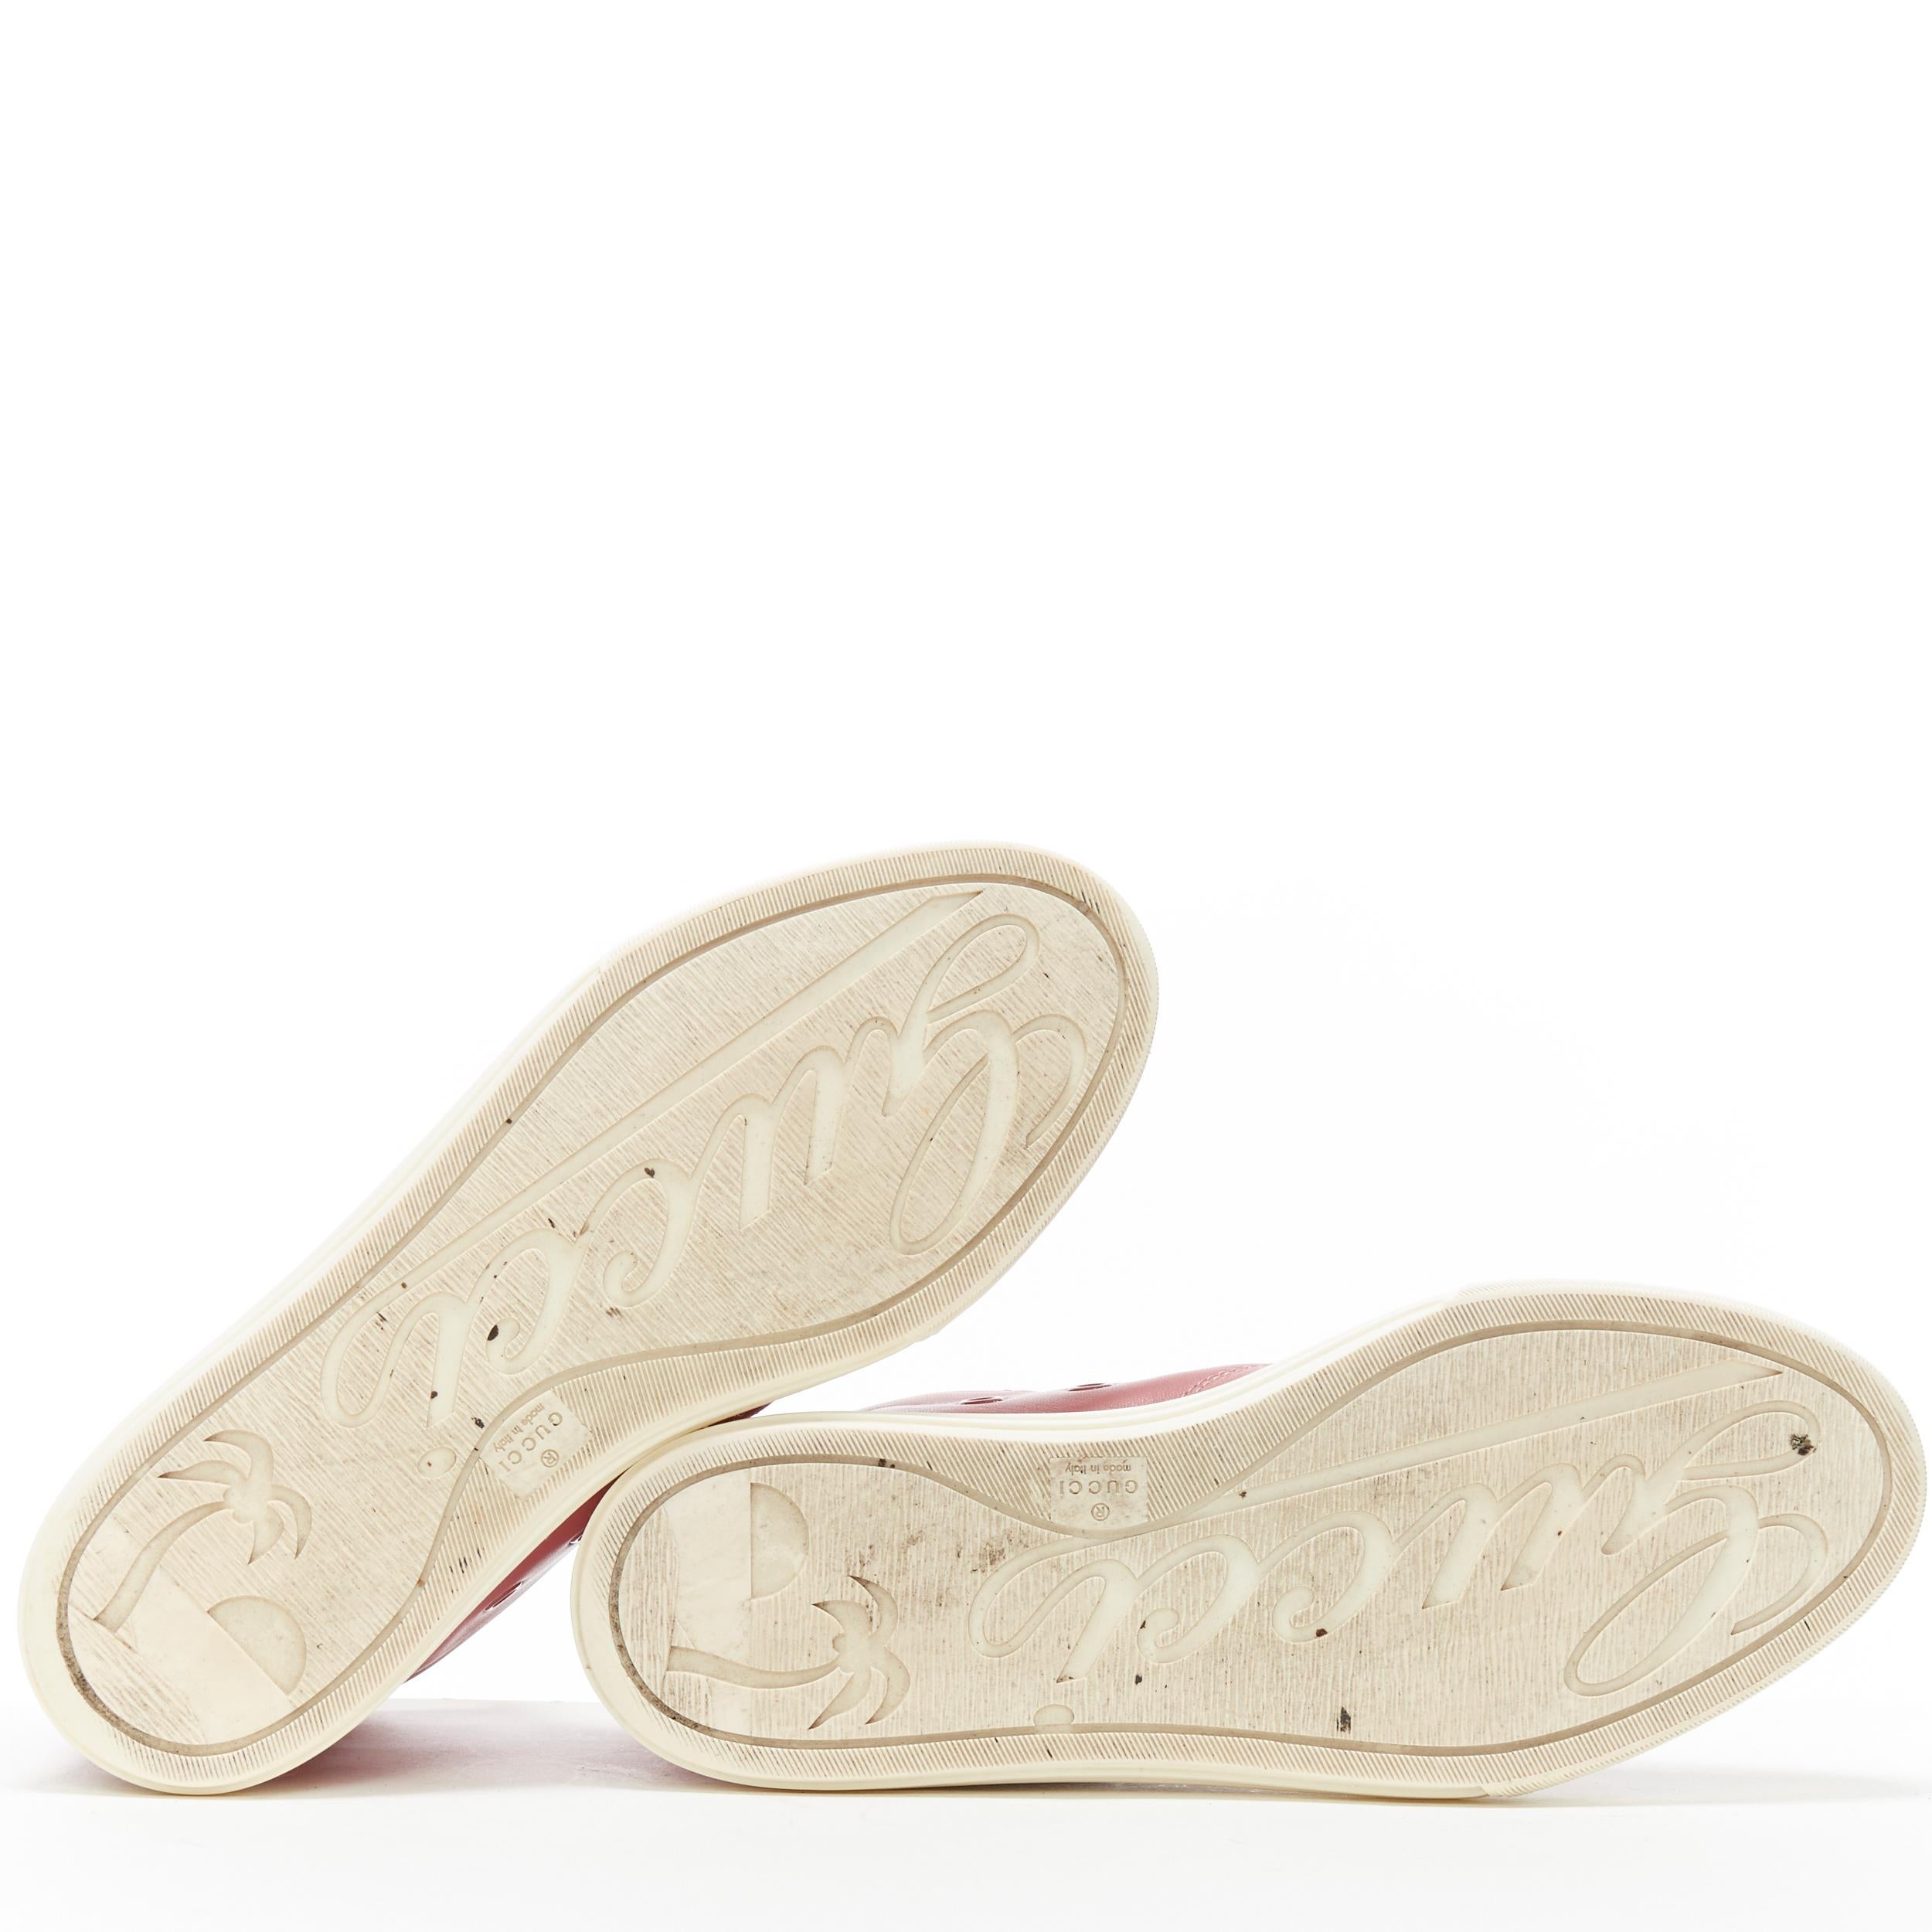 Beige GUCCI pink leather studded toe cap high top casual sneakesr EU36.5